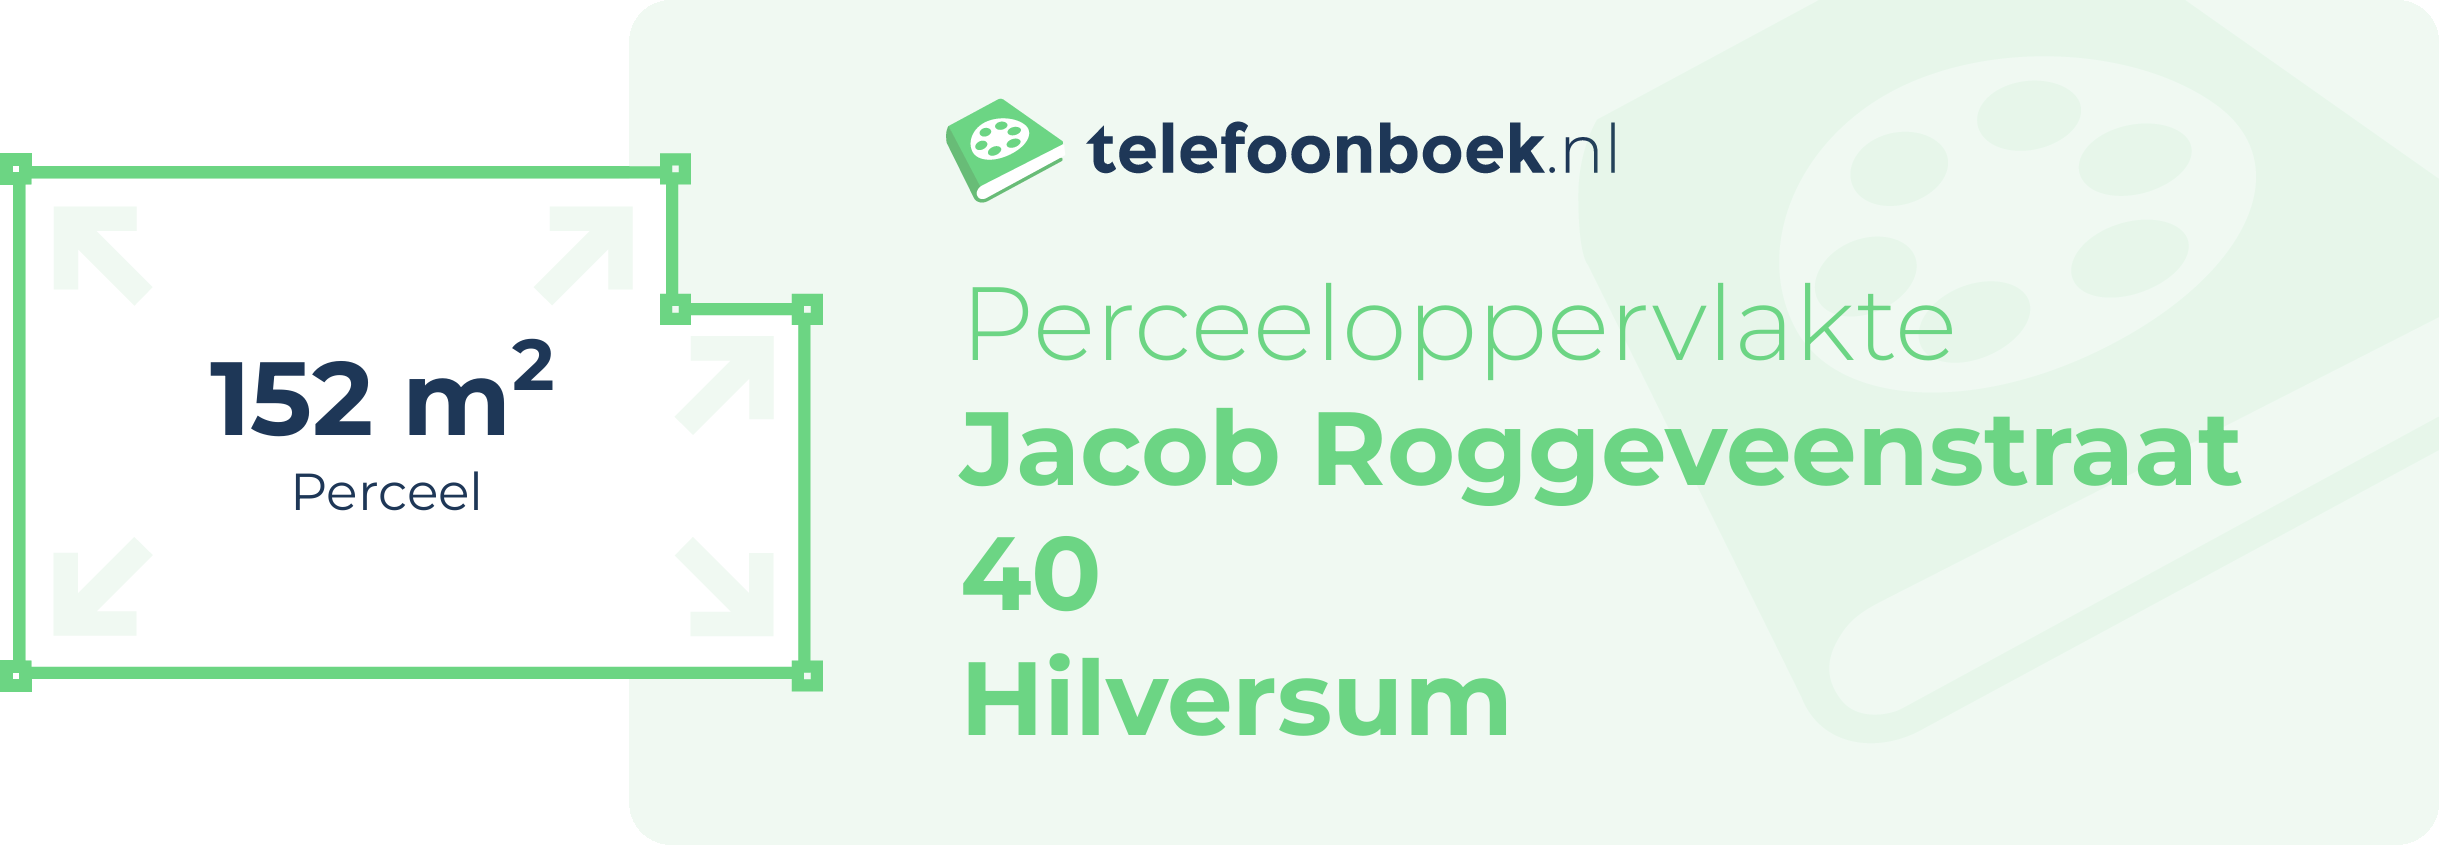 Perceeloppervlakte Jacob Roggeveenstraat 40 Hilversum